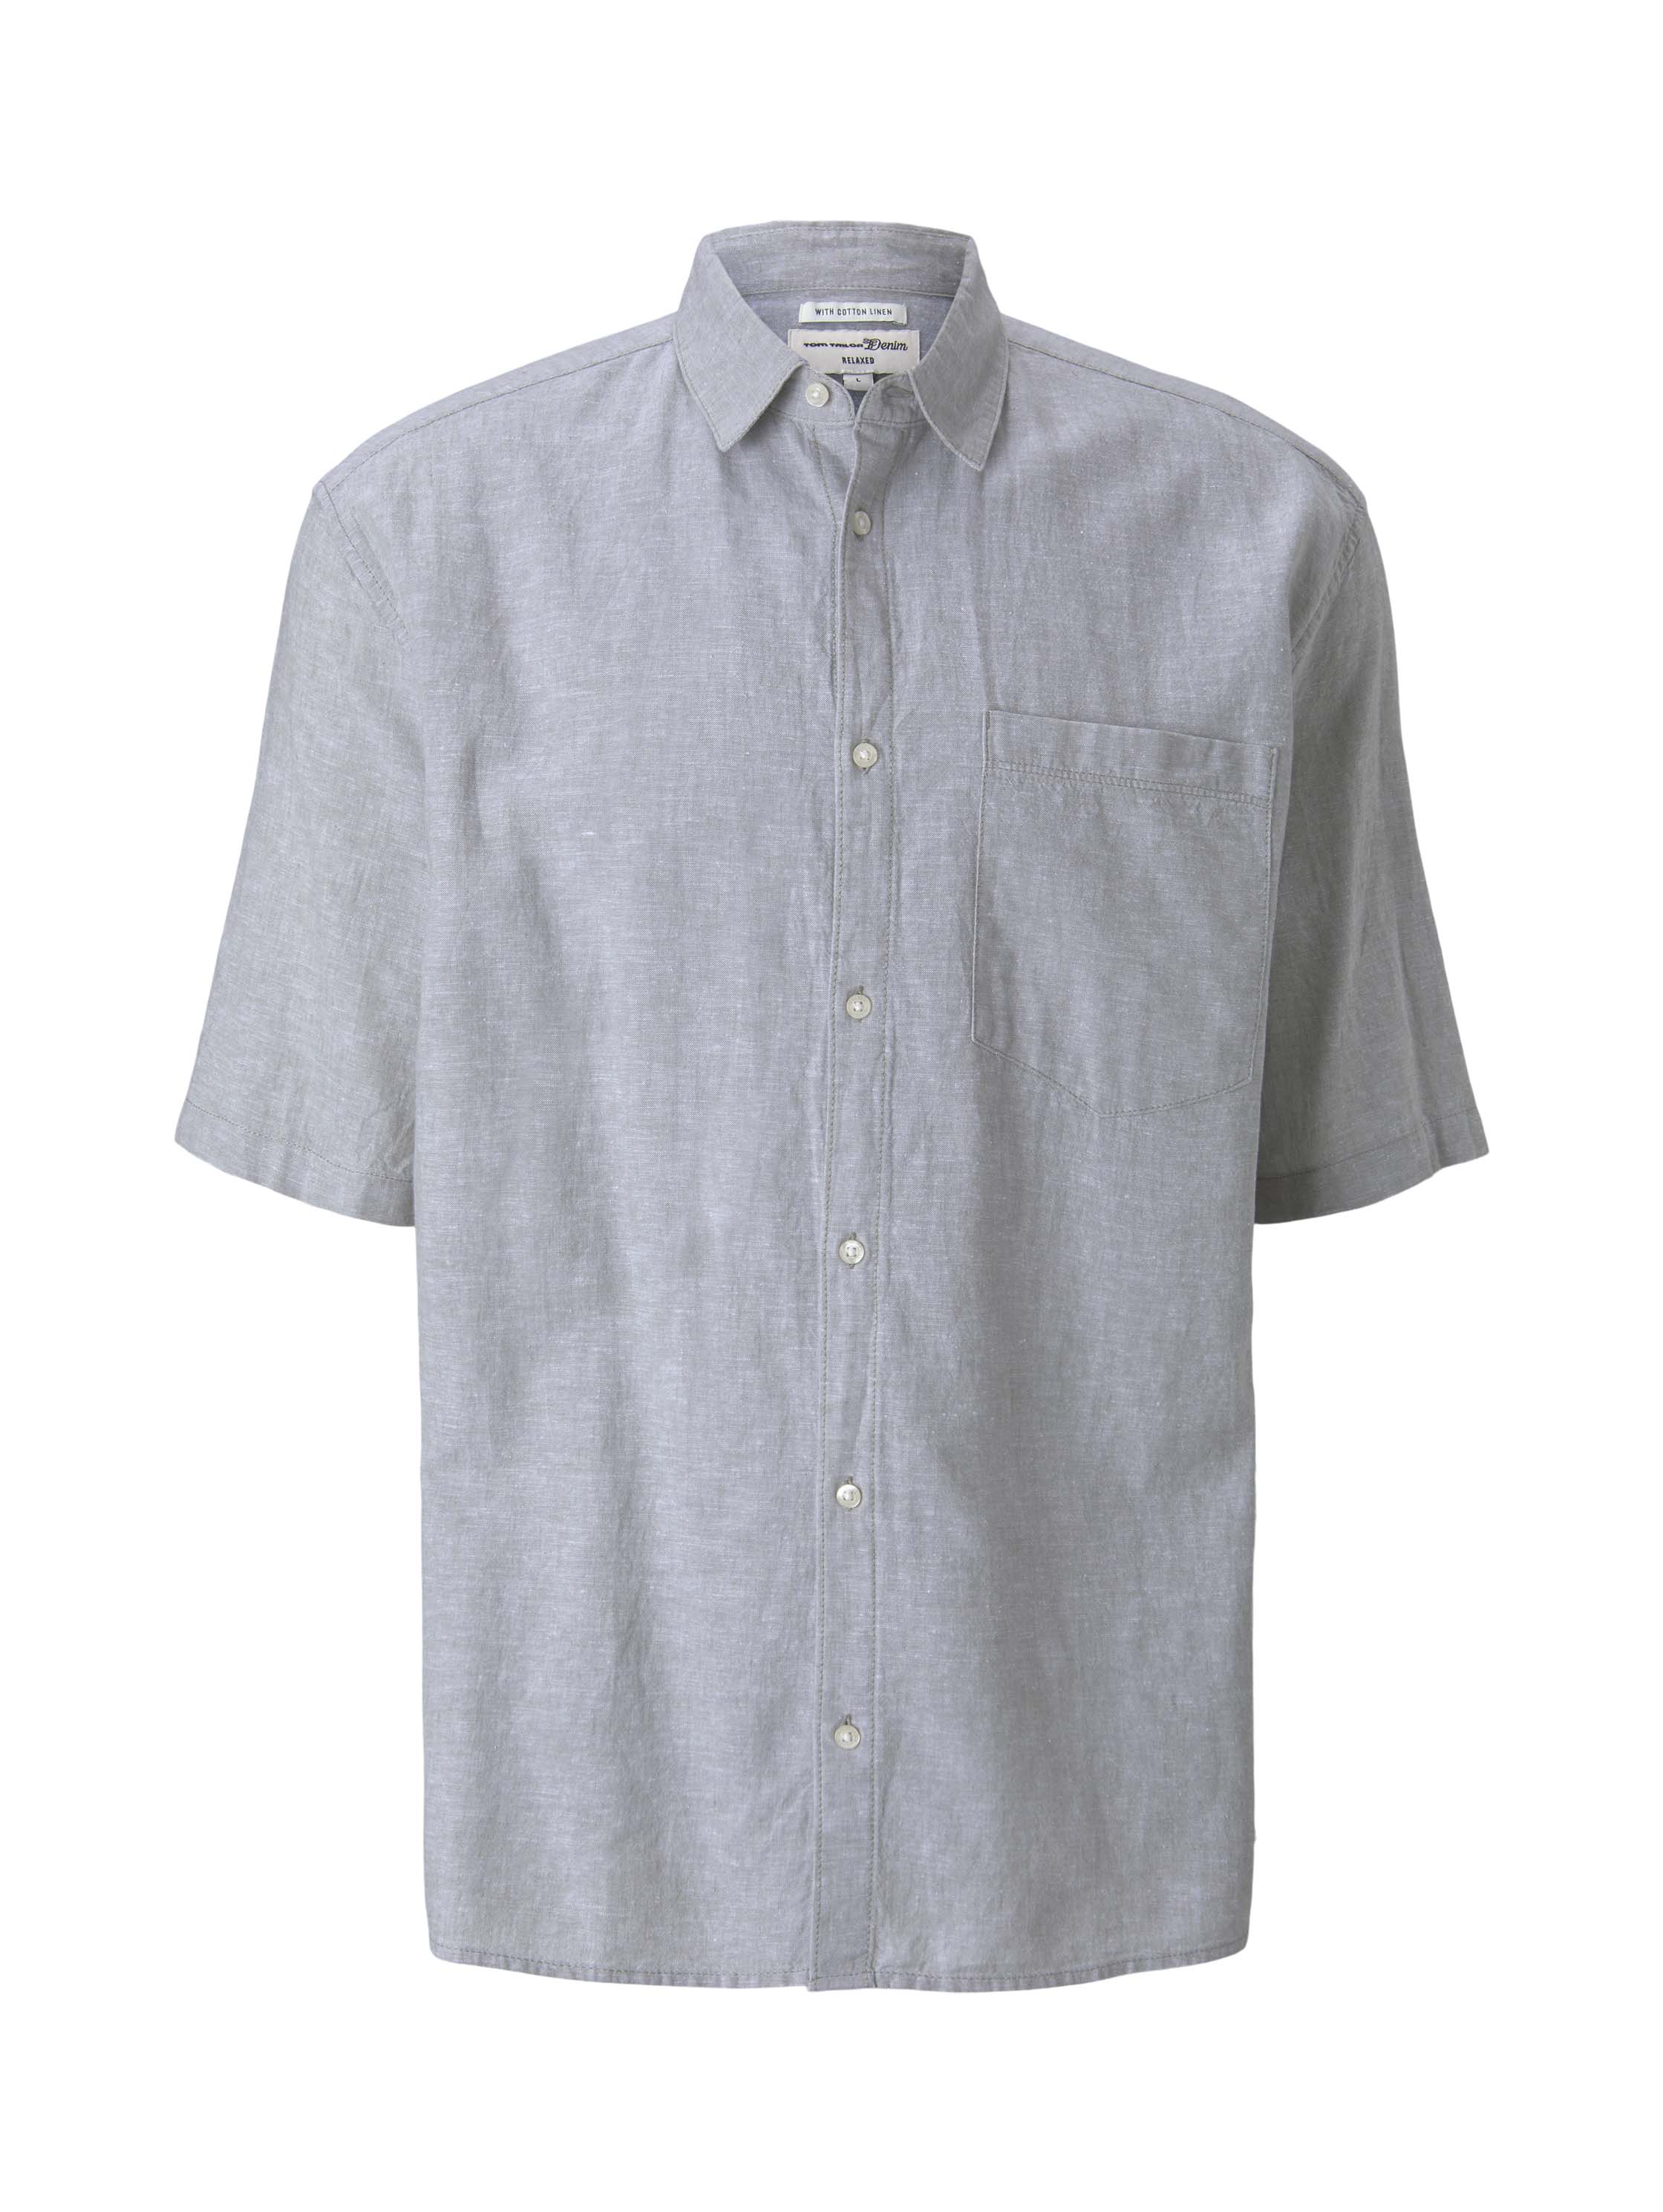 boxy linen short sleeve shirt, olive white chambray